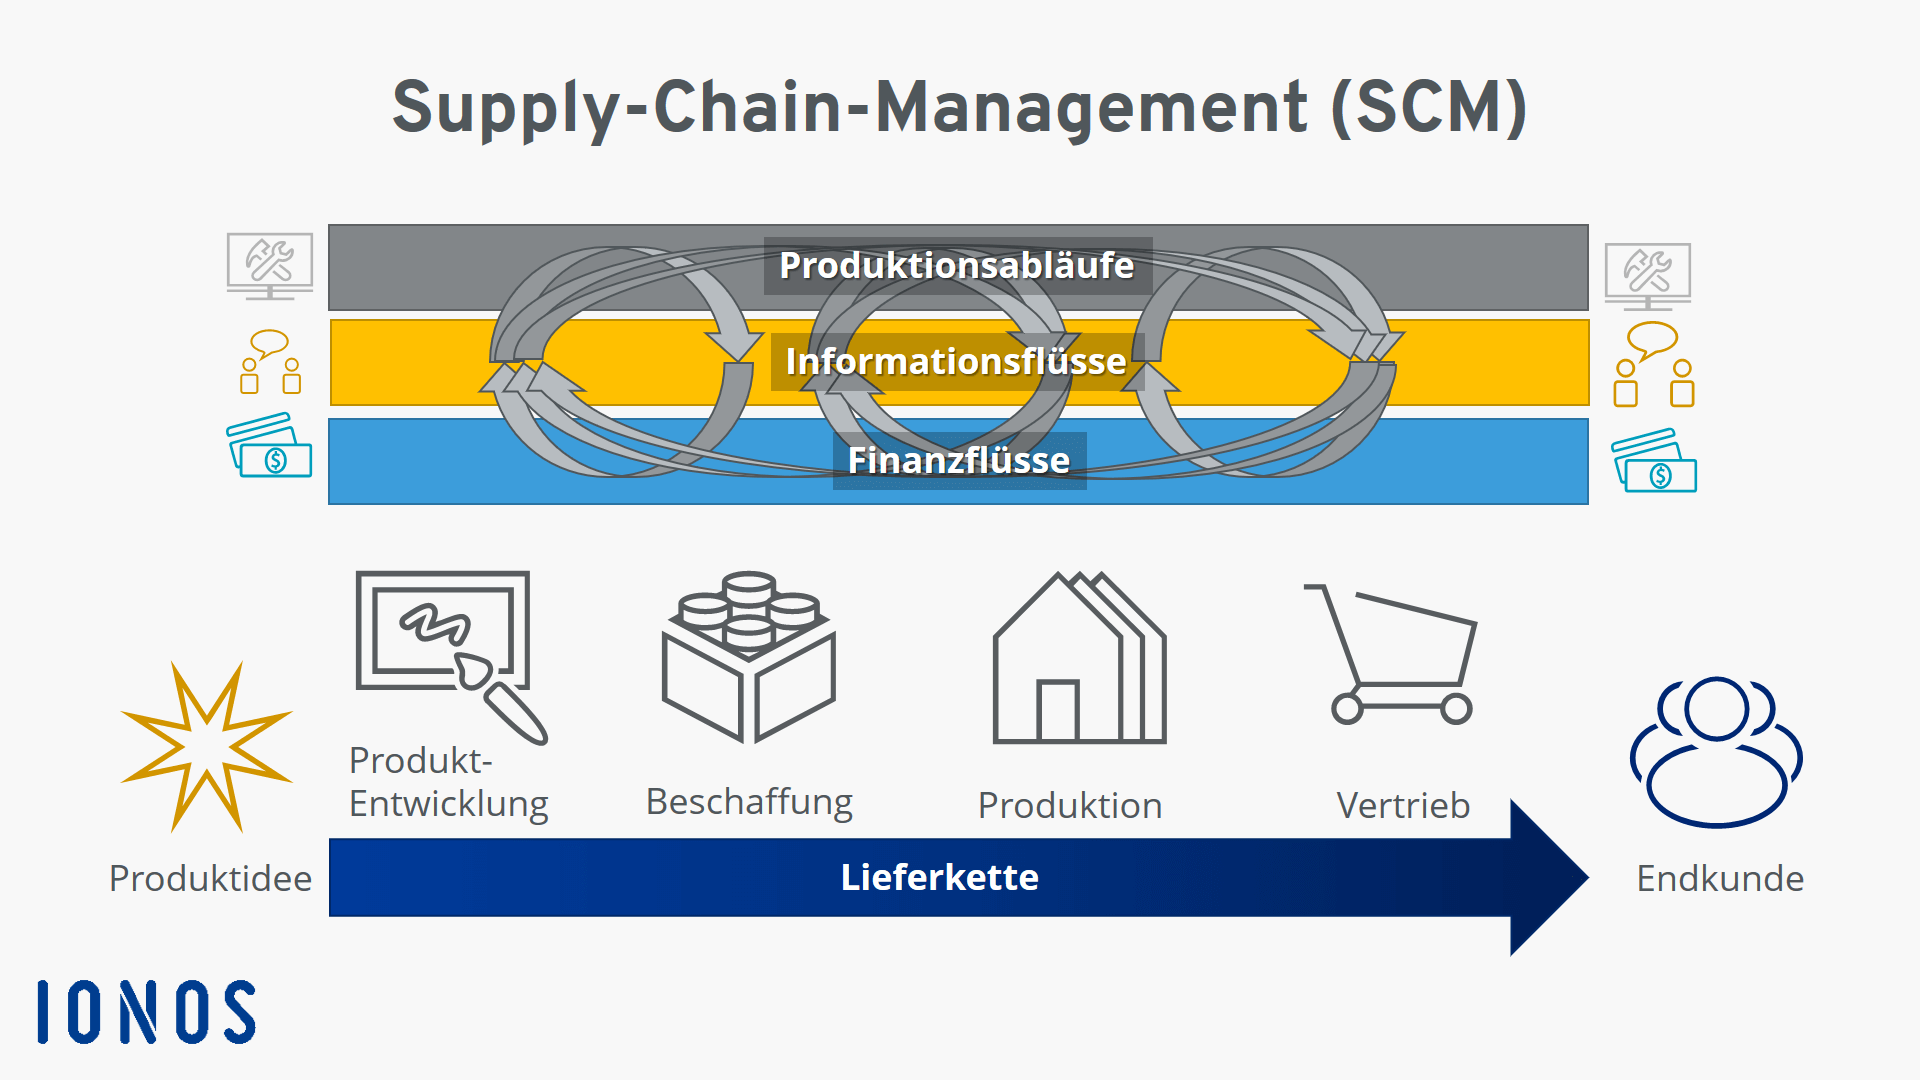 Supply-Chain-Management entlang der Lieferkette